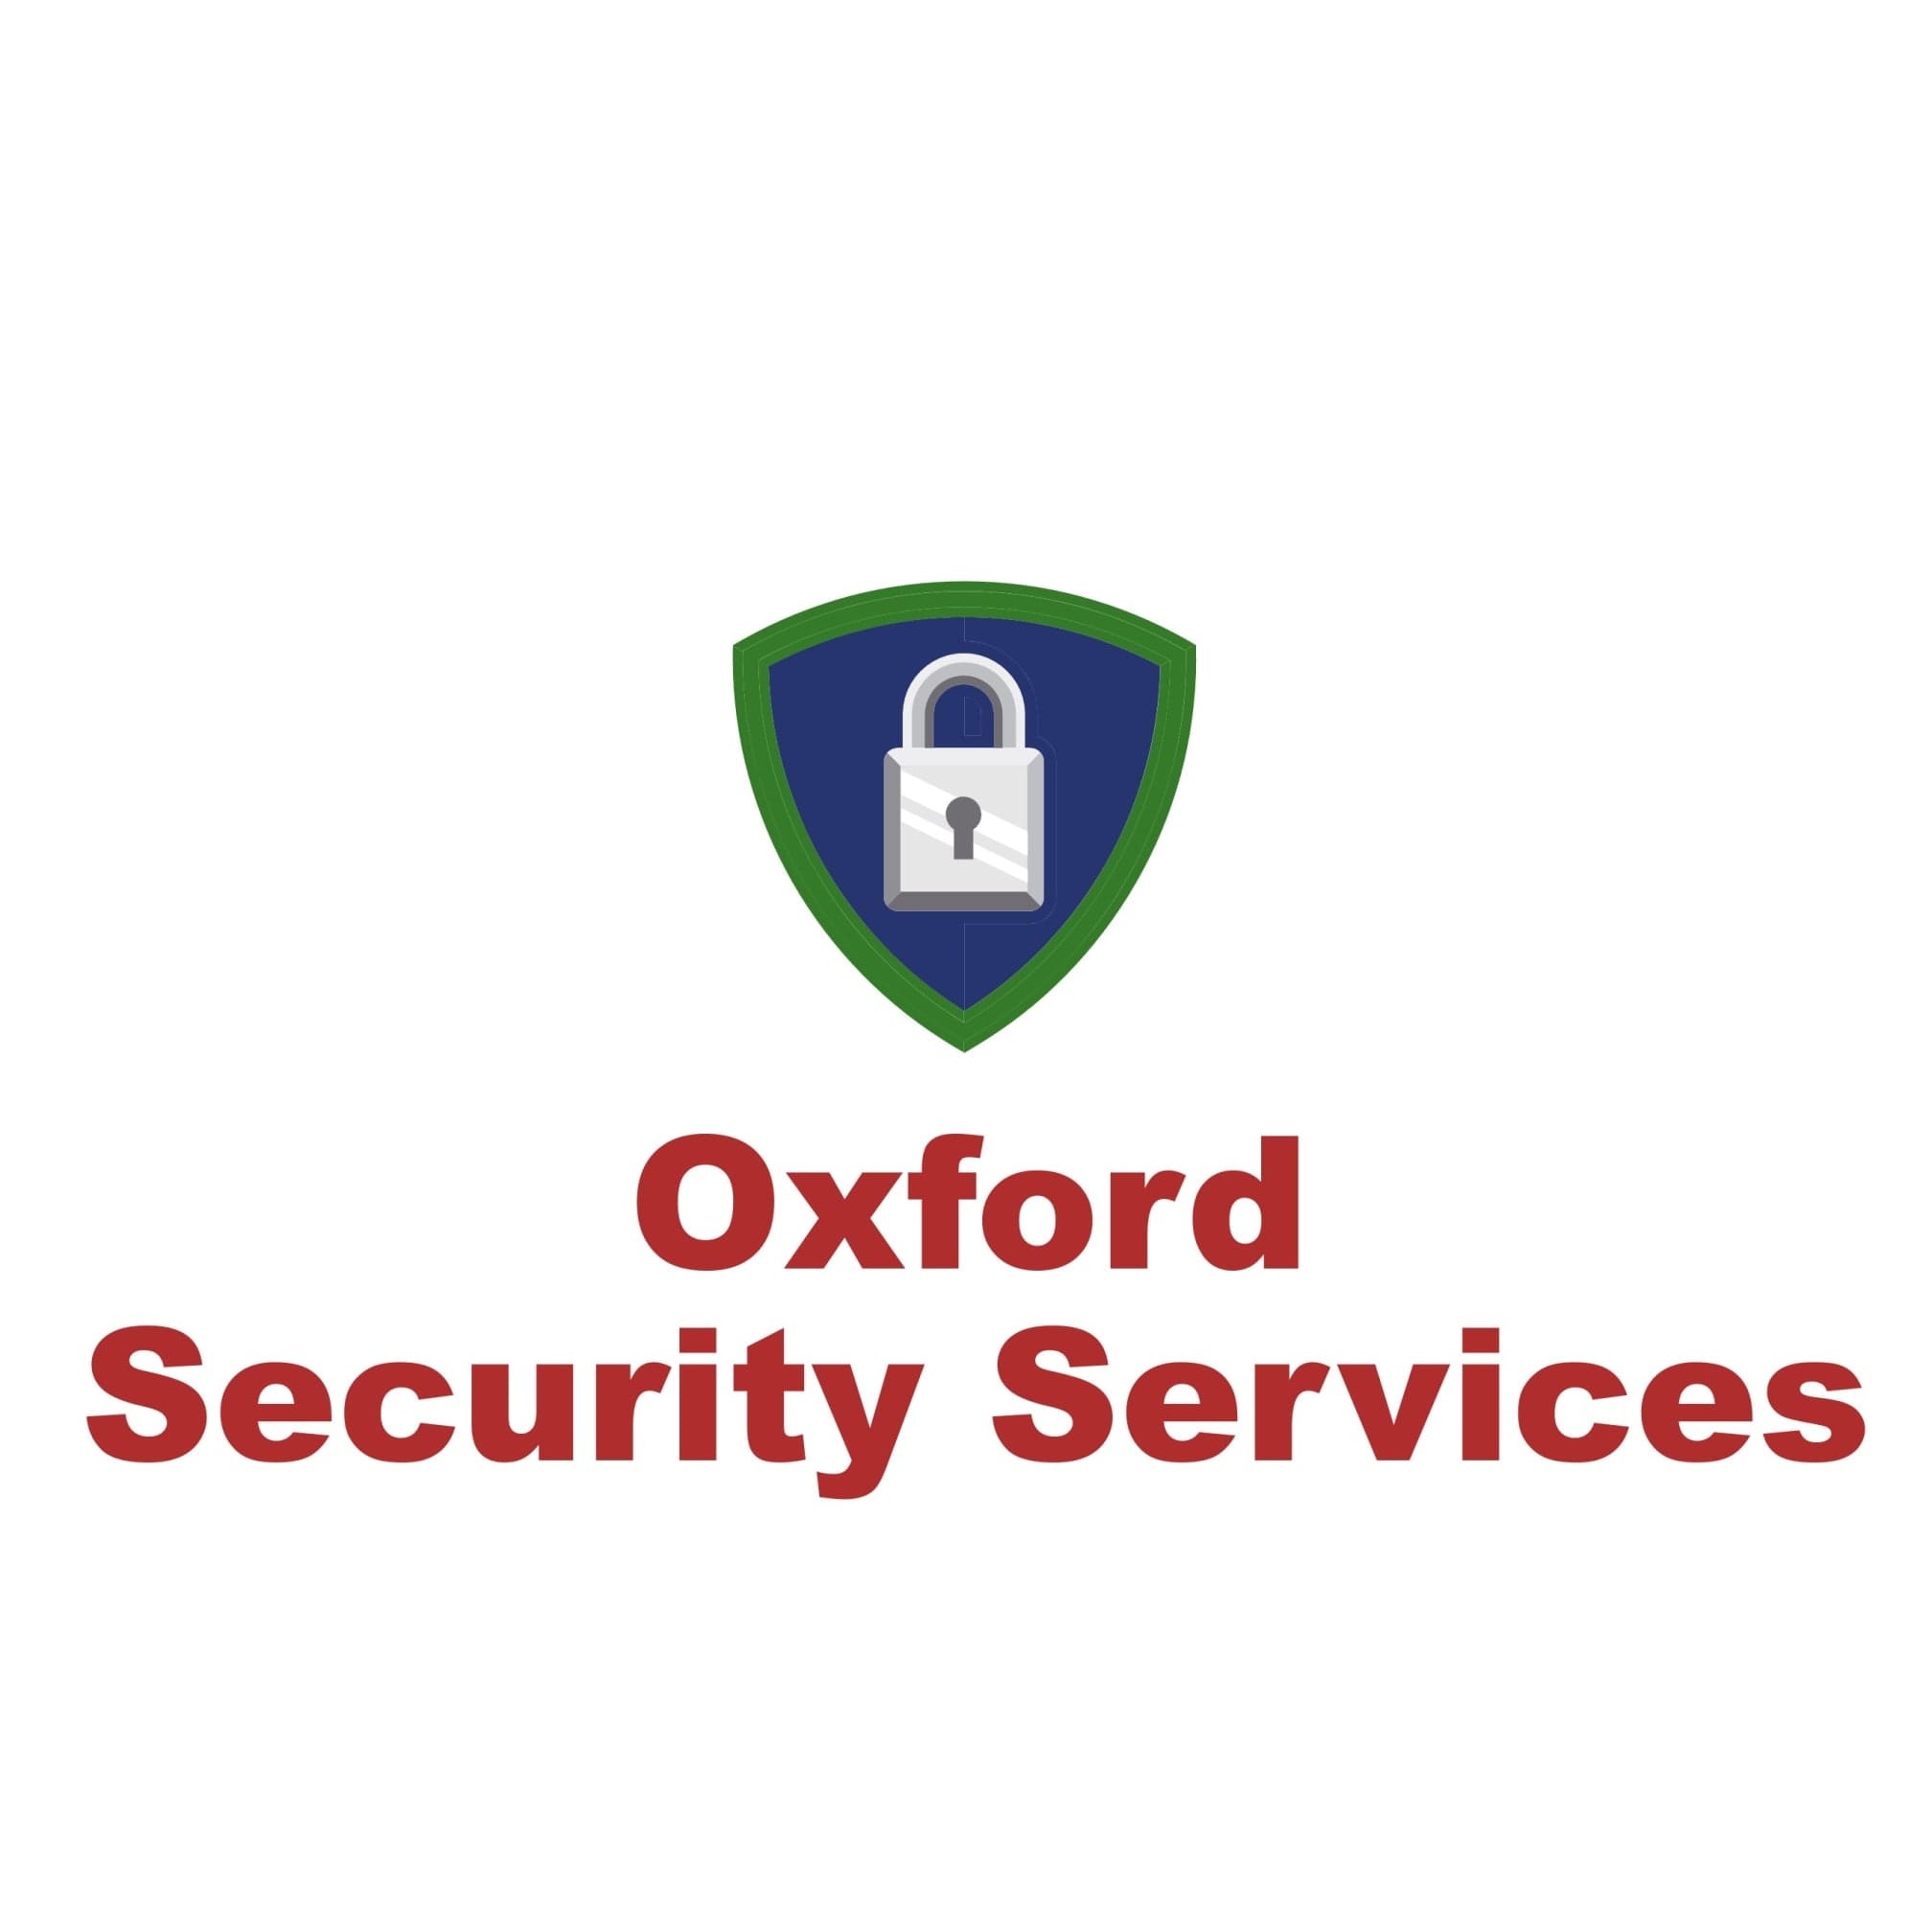 Oxford Security Services Logo